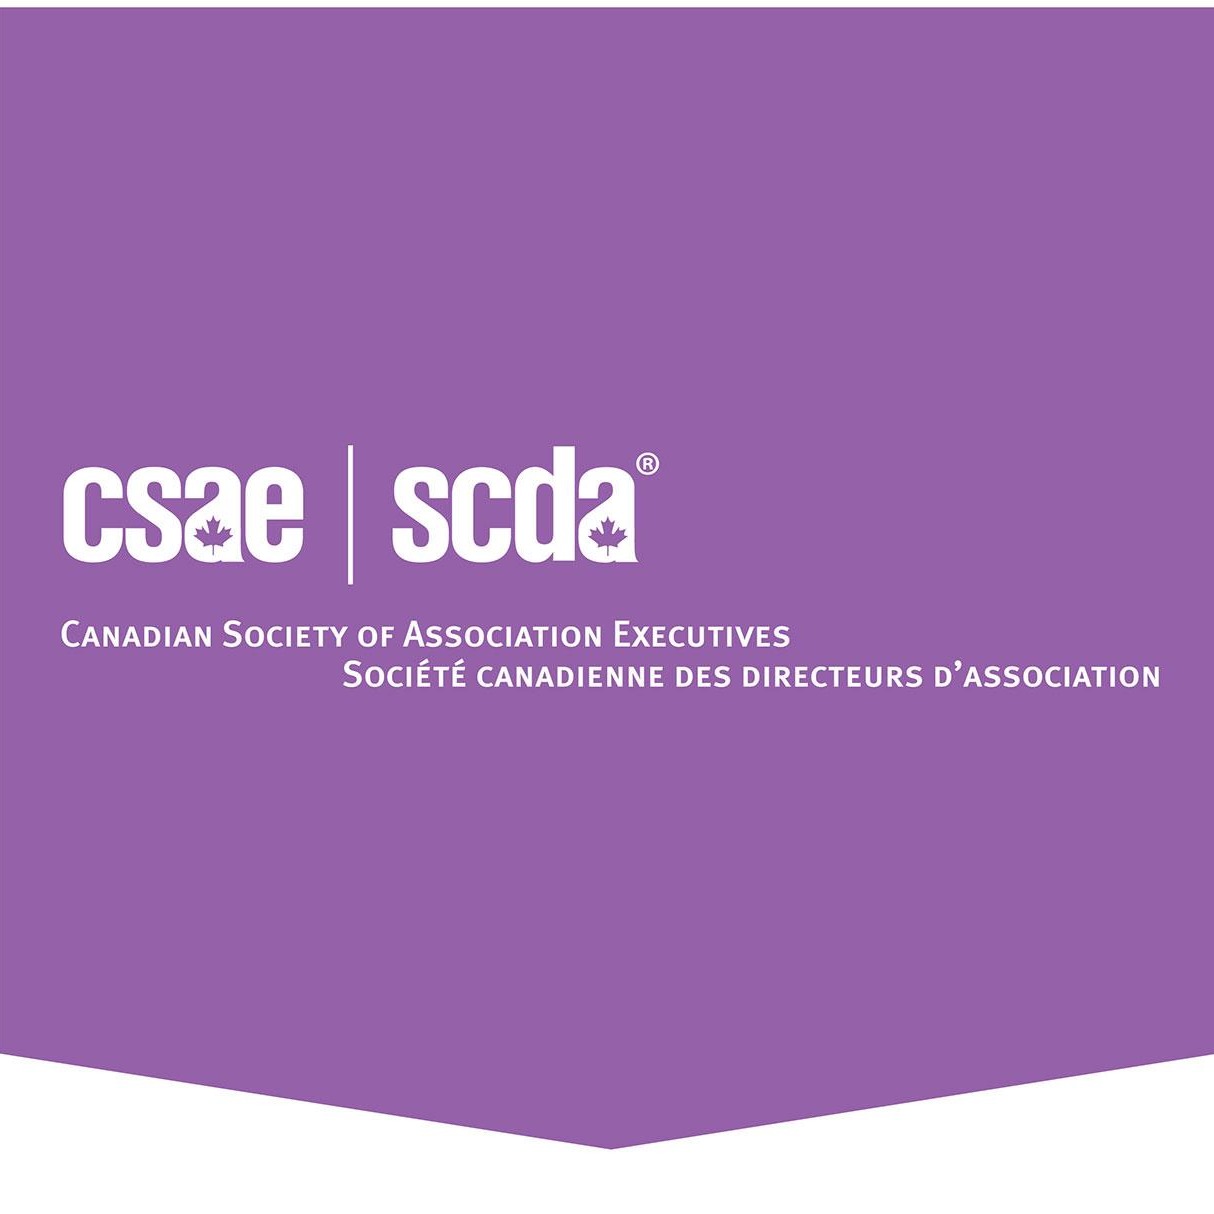 Canadian Society of Association Executives (CSAE)